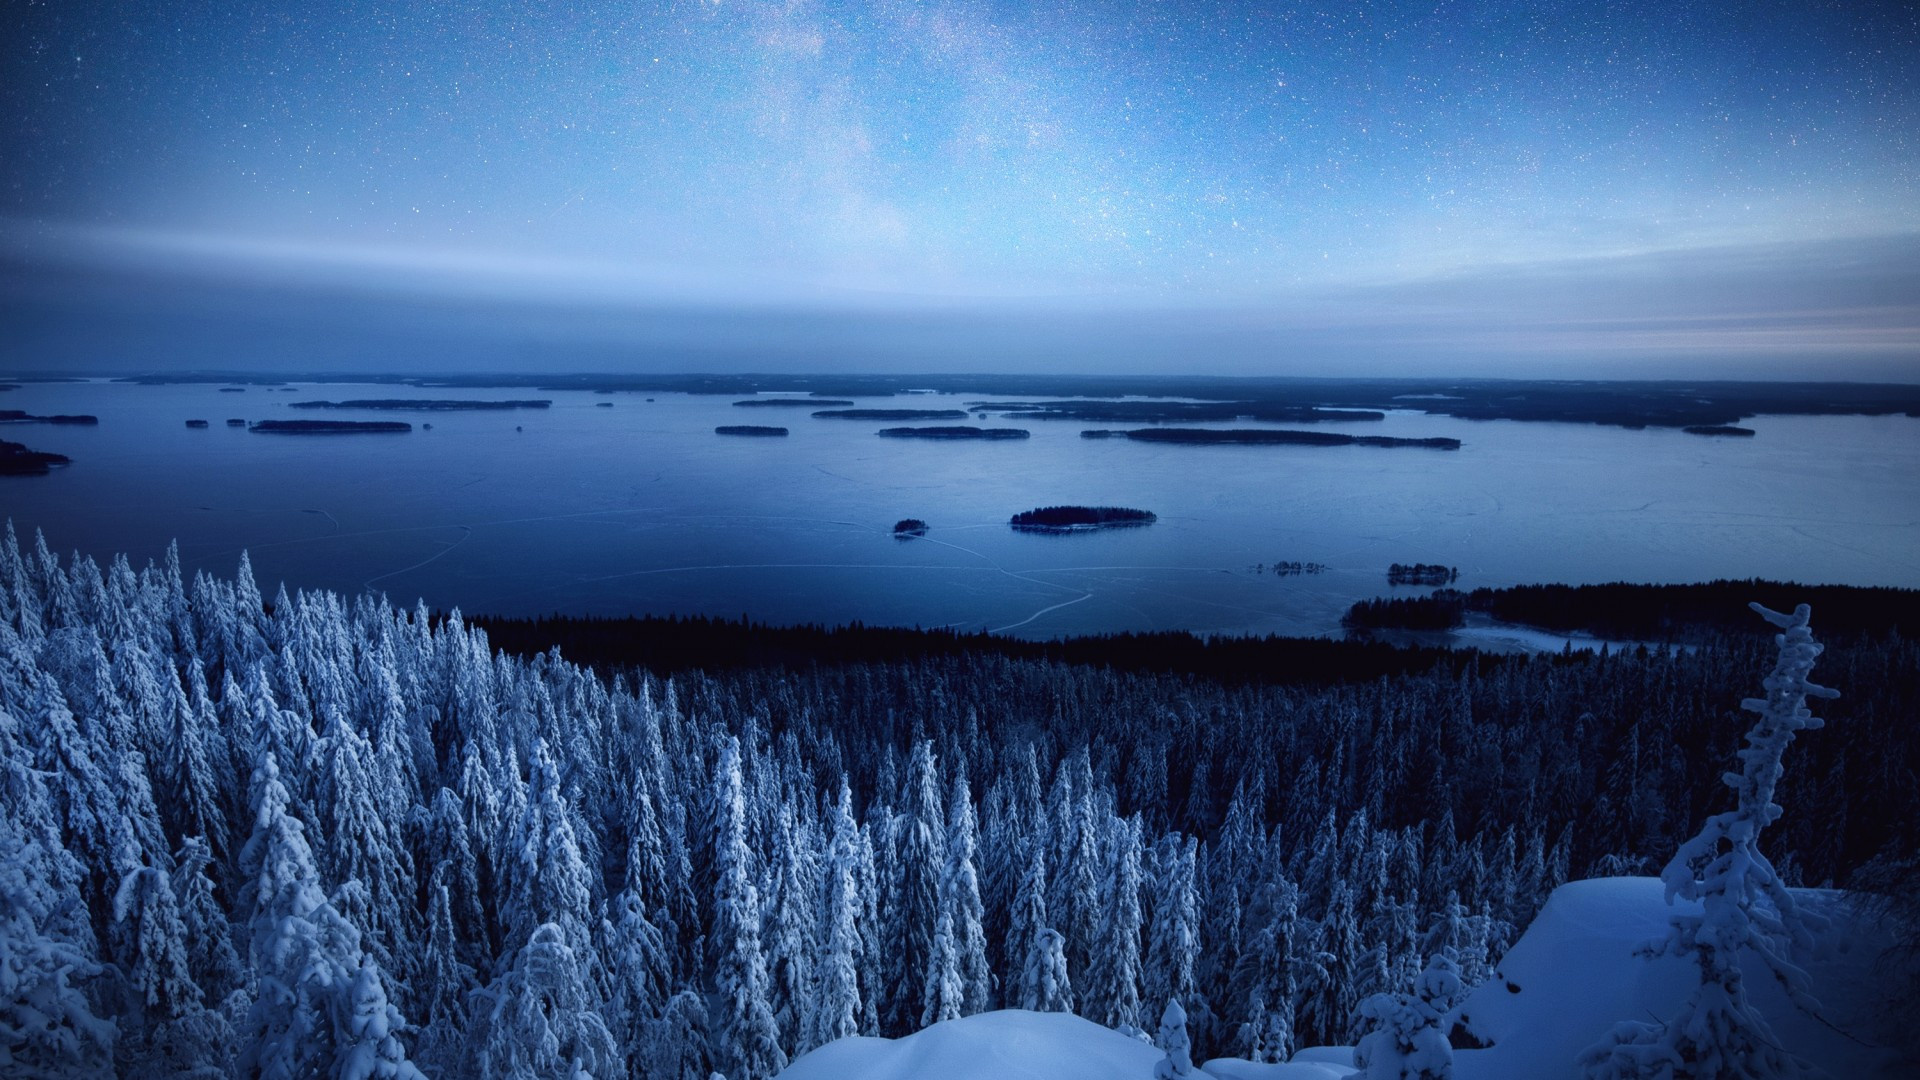 Finland: Koli National Park, The municipalities of Joensuu, Lieksa and Kontiolahti. 1920x1080 Full HD Wallpaper.